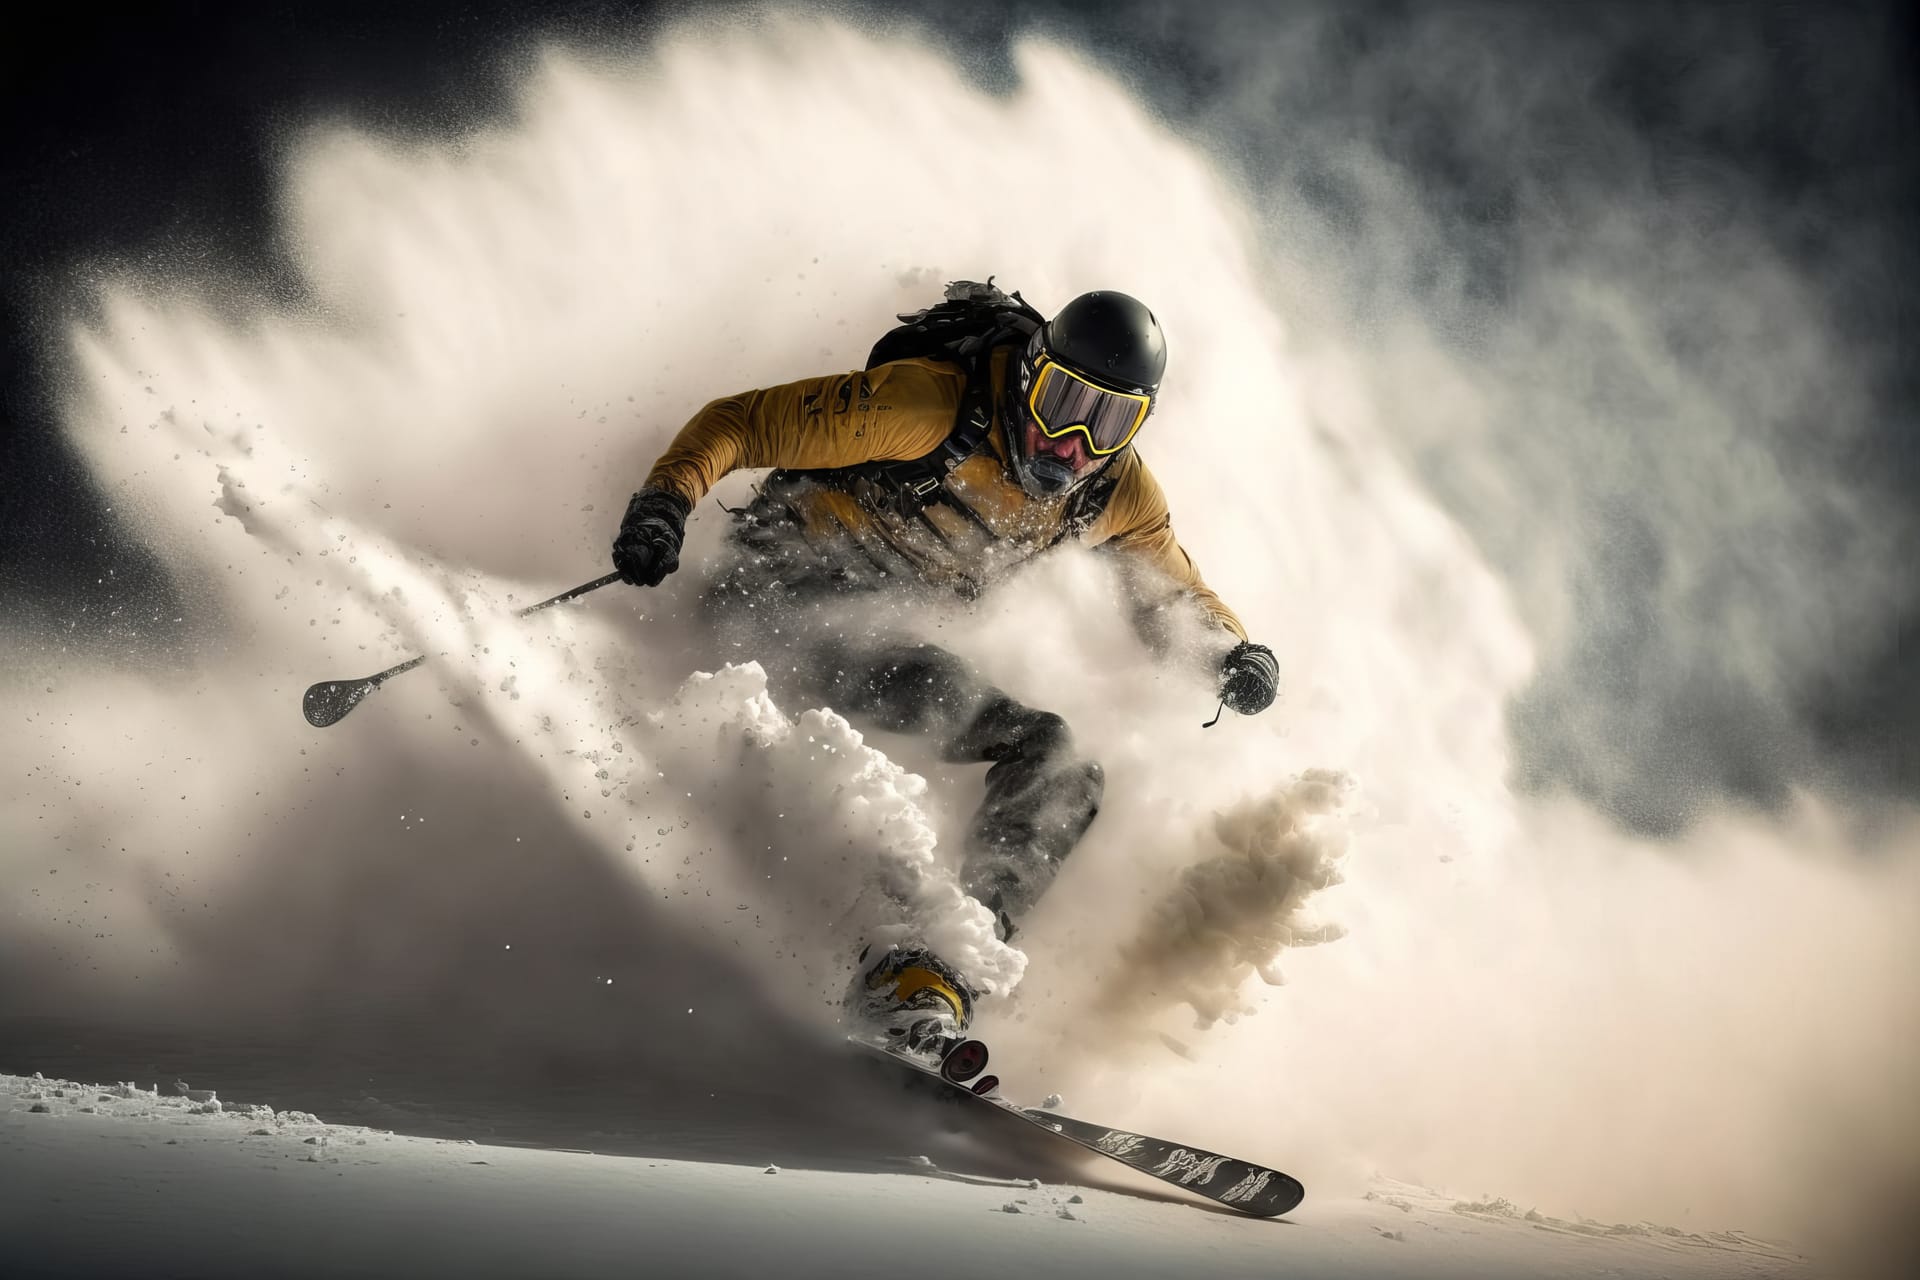 Best sports images generative illustration skier riding snow